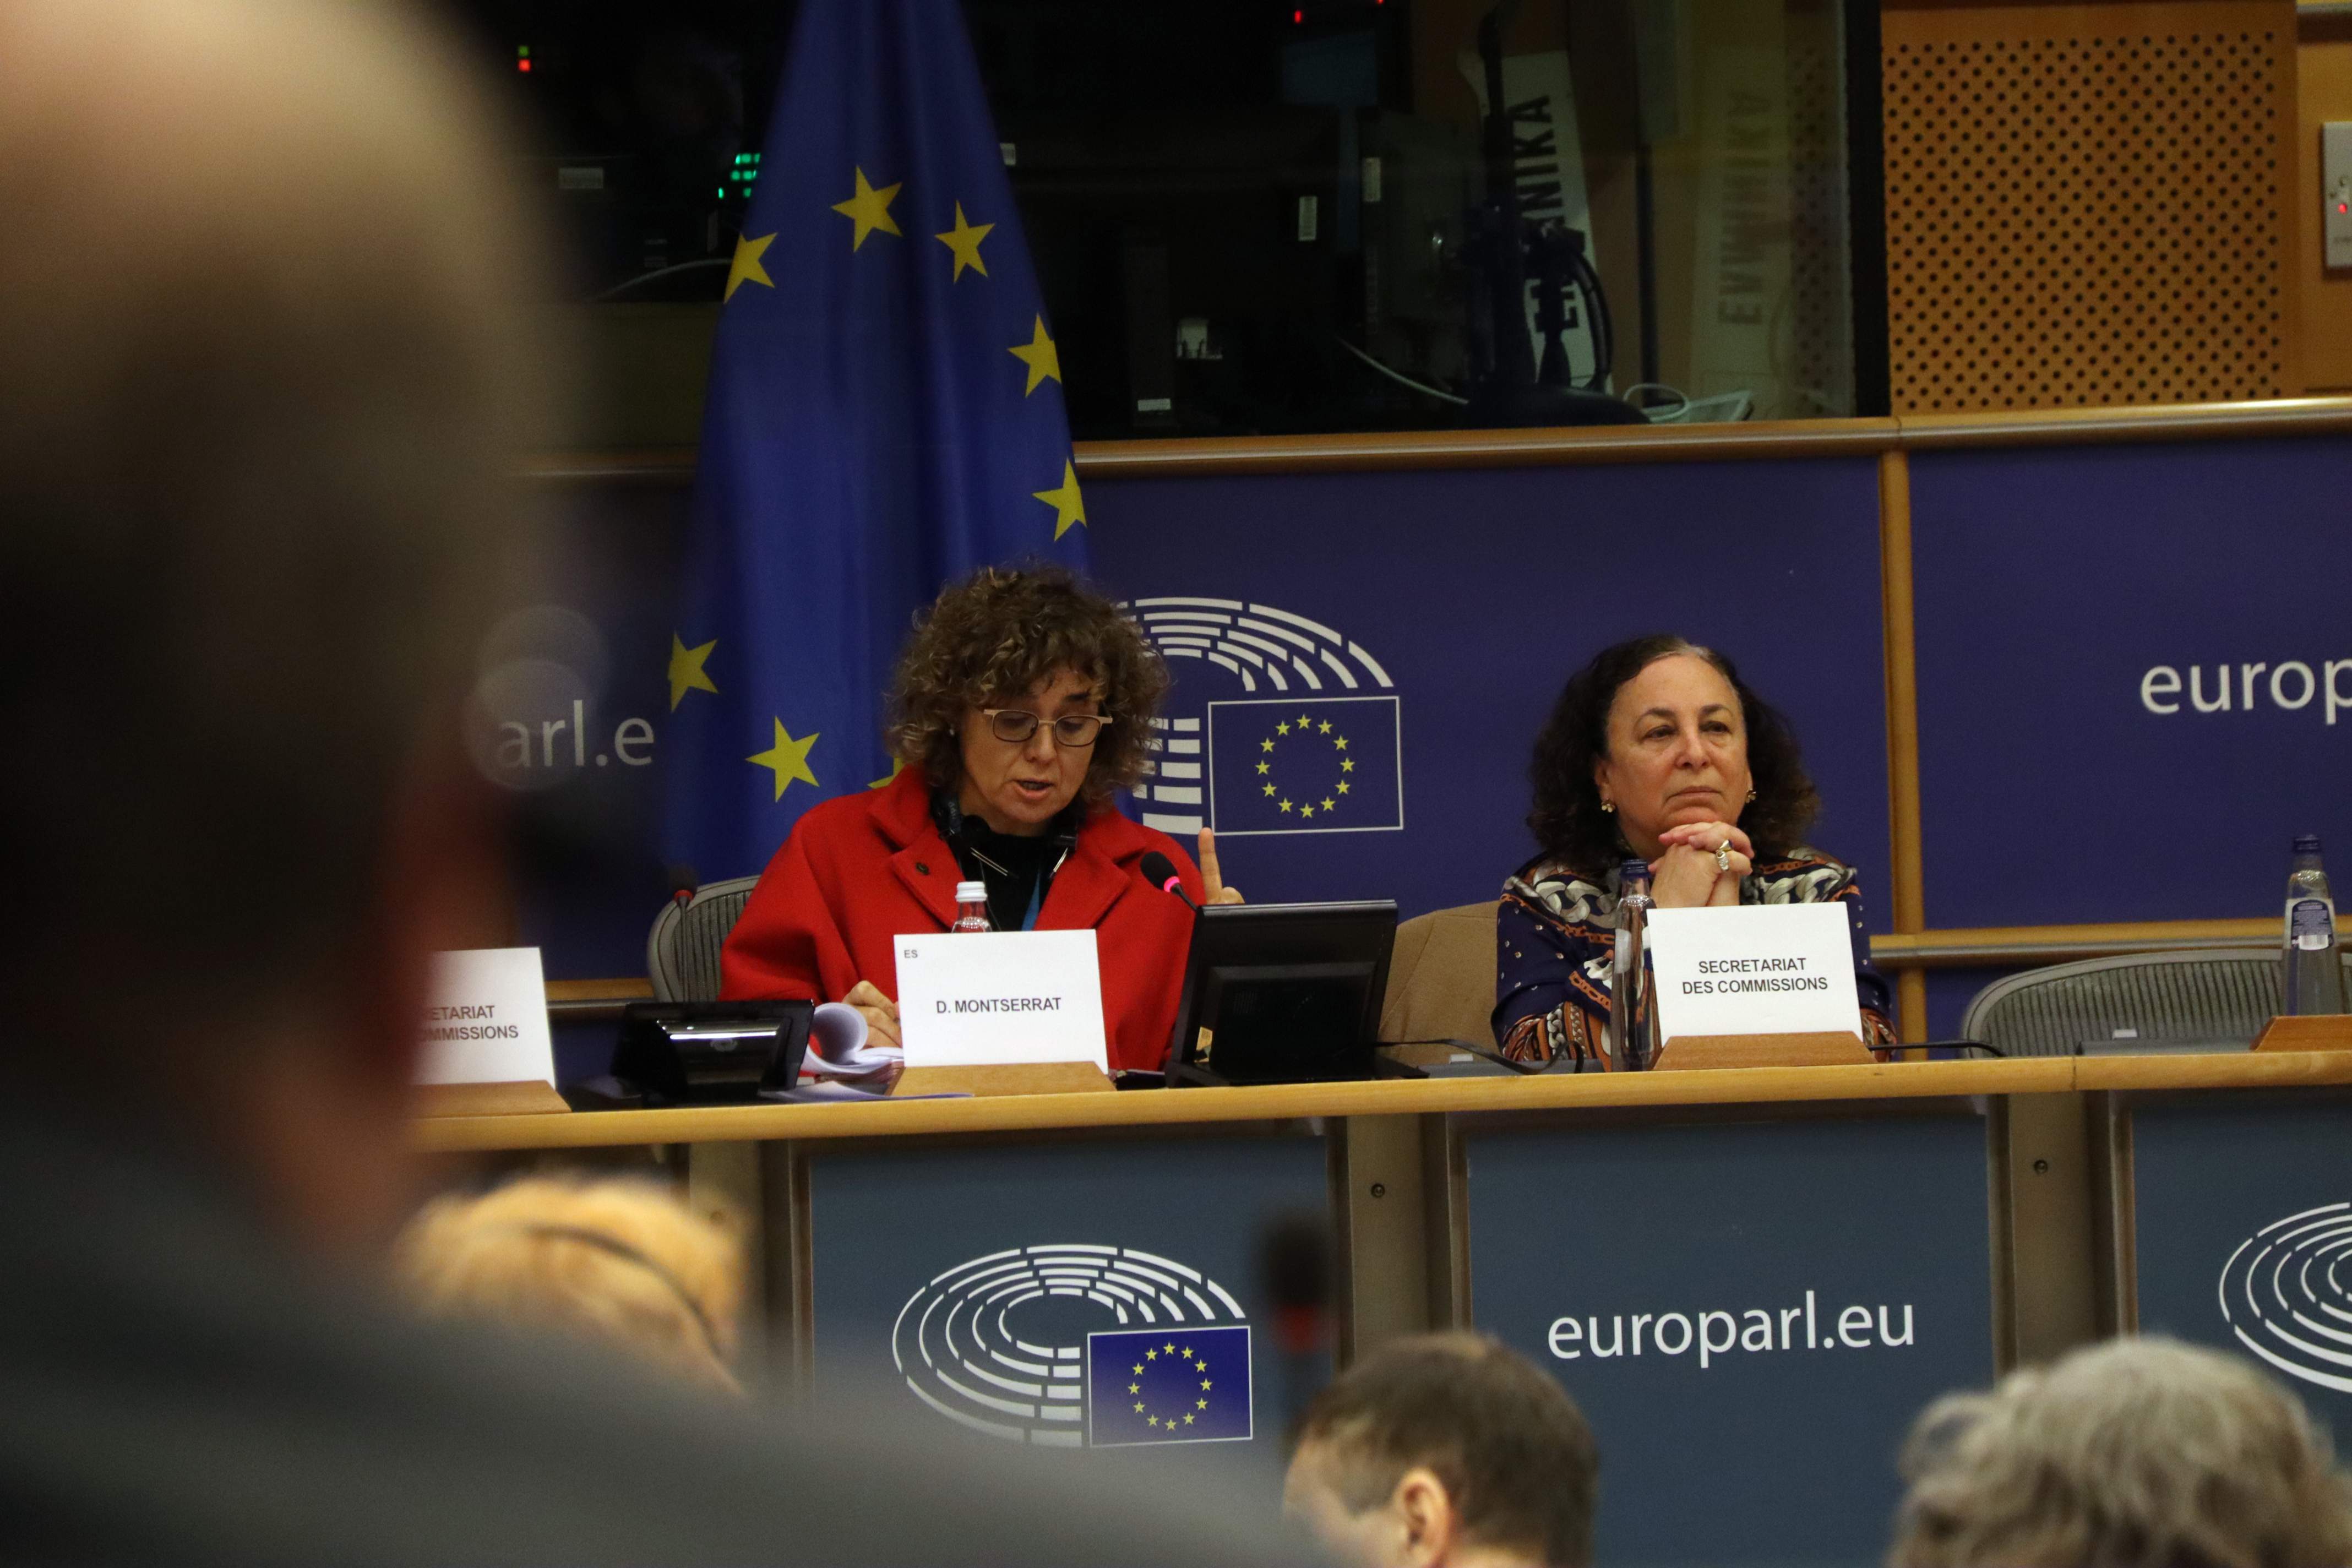 Tense European Parliament debate over "instrumentalized" mission against Catalan language